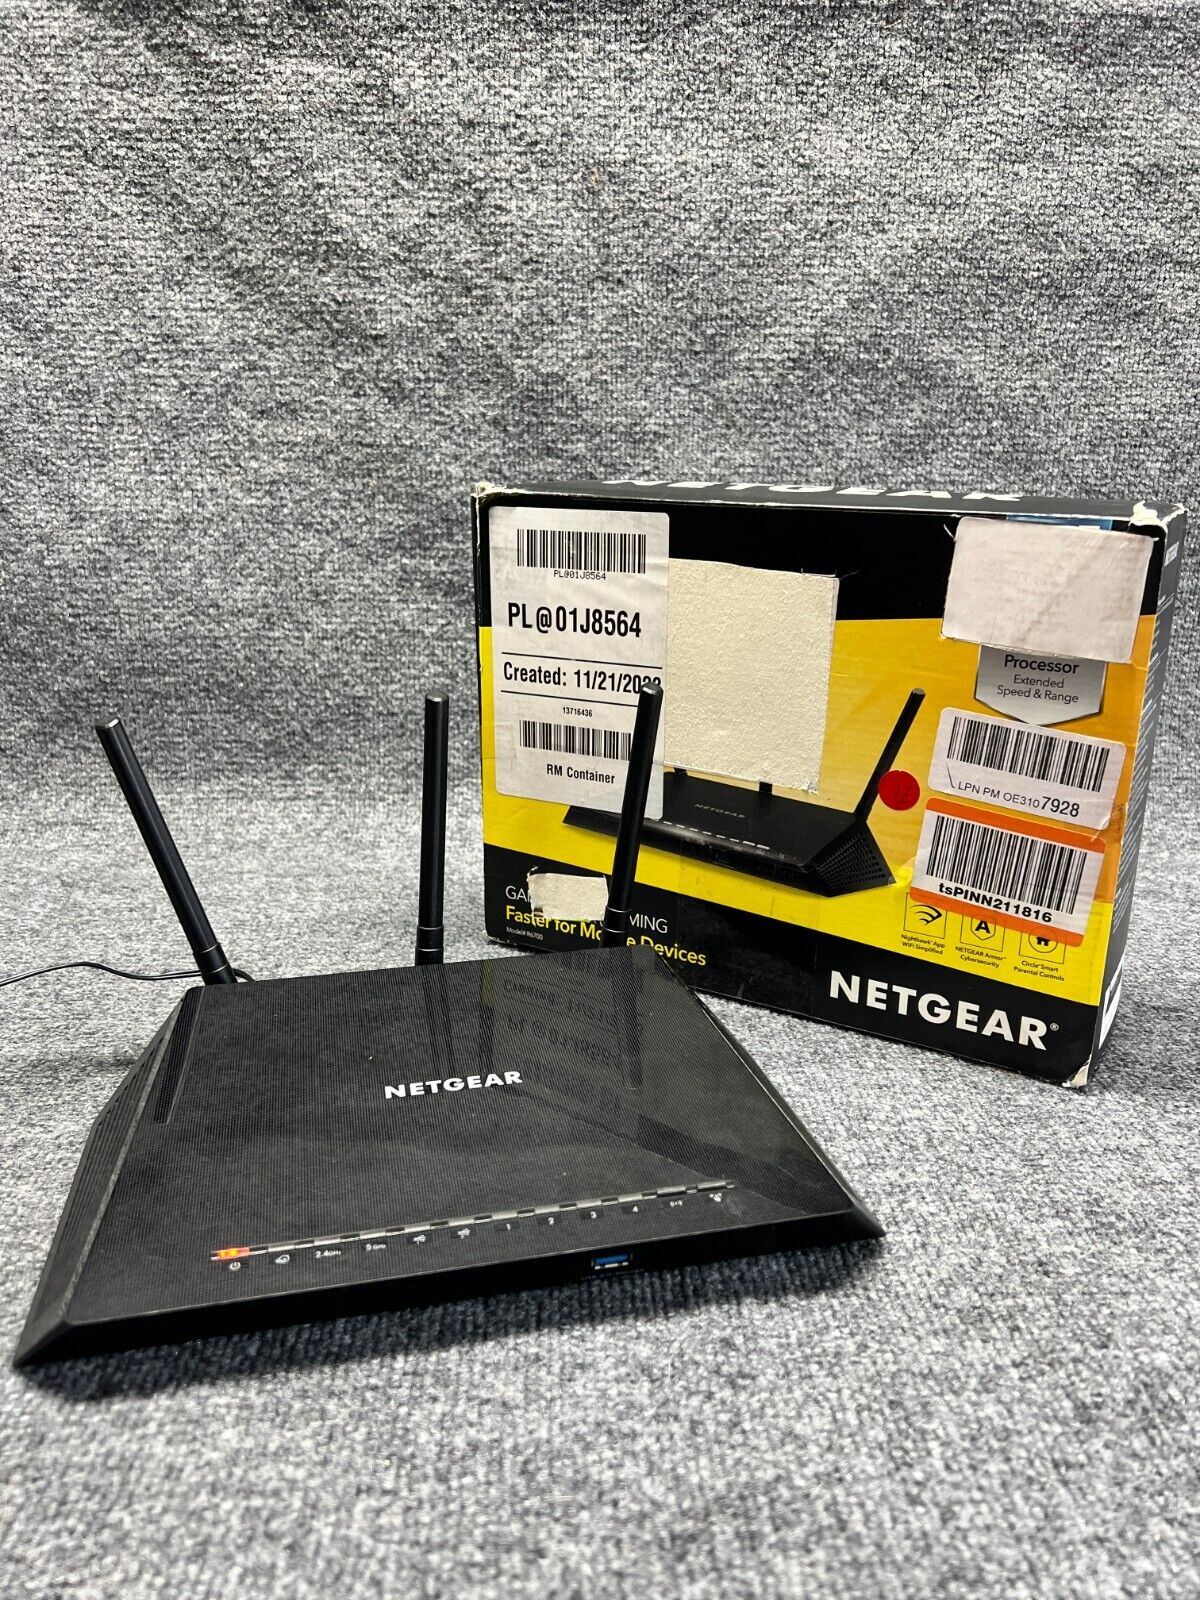 NETGEAR Nighthawk Smart Wi-Fi Router, R6700 - AC1750